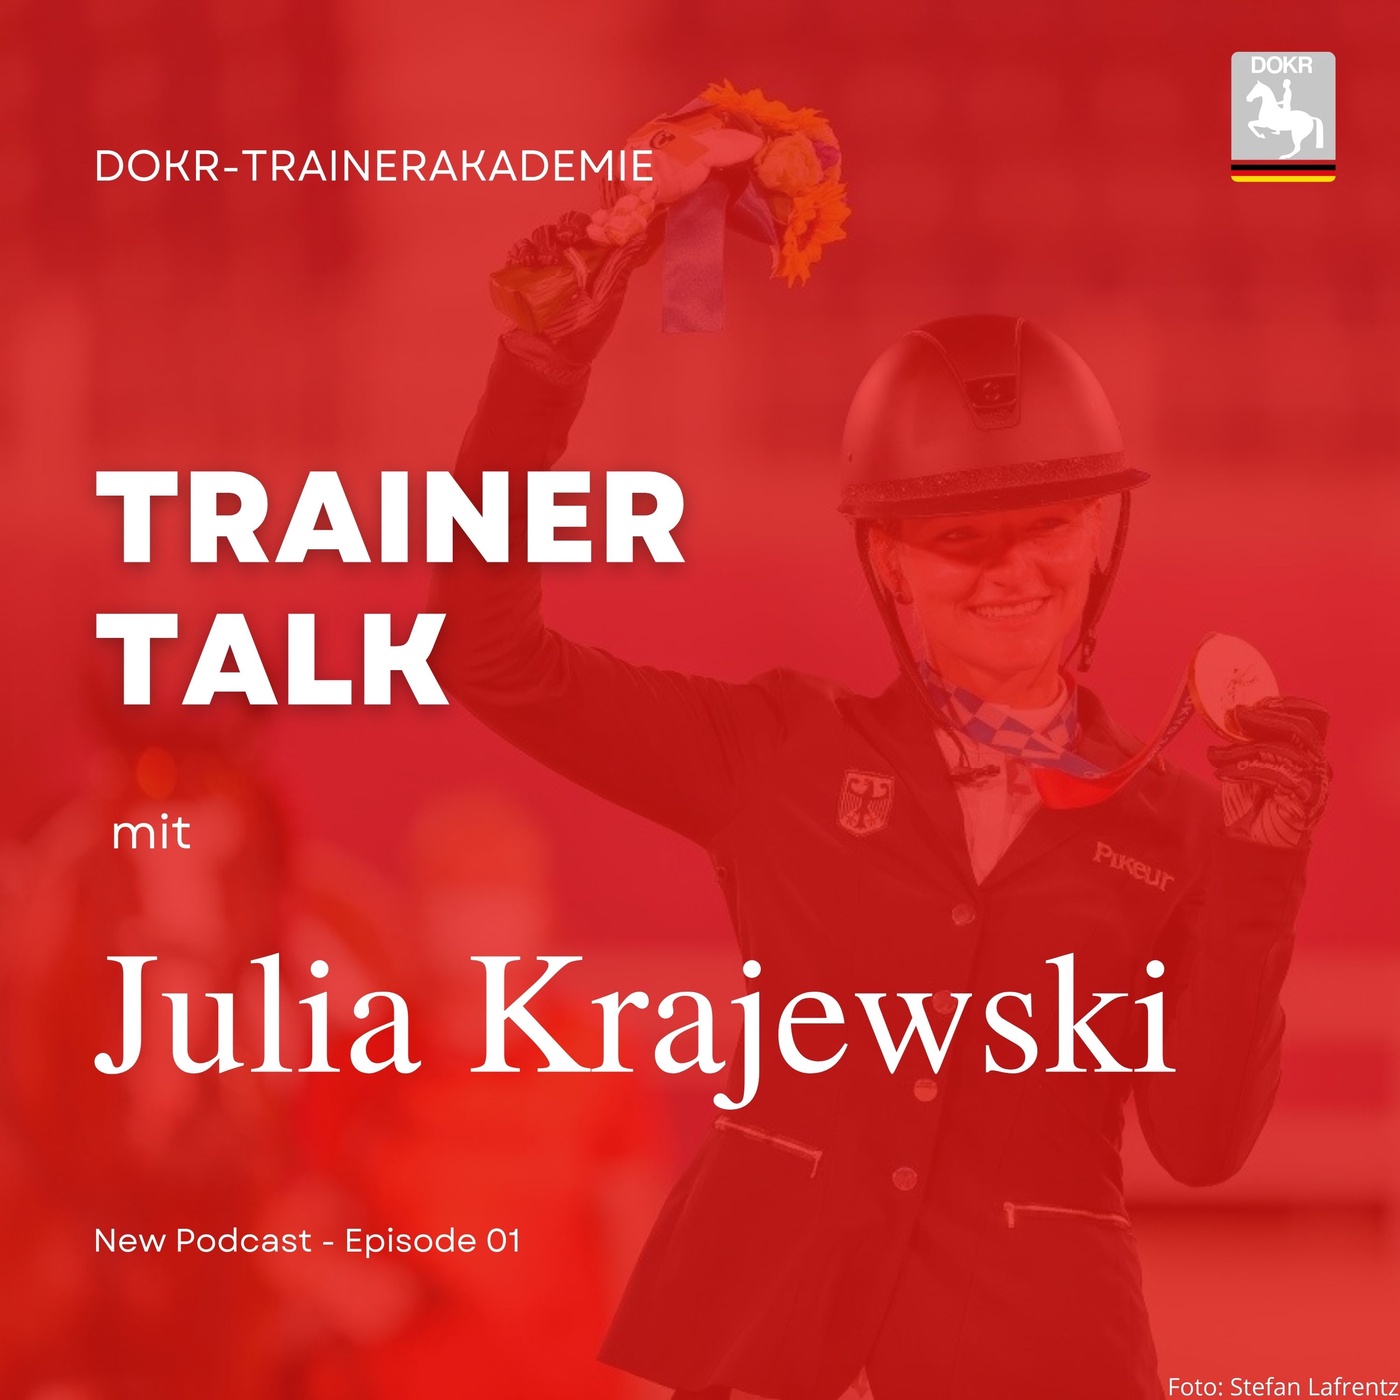 Olympiasiegerin Julia Krajewski im Trainer-Talk der DOKR-Trainerakademie